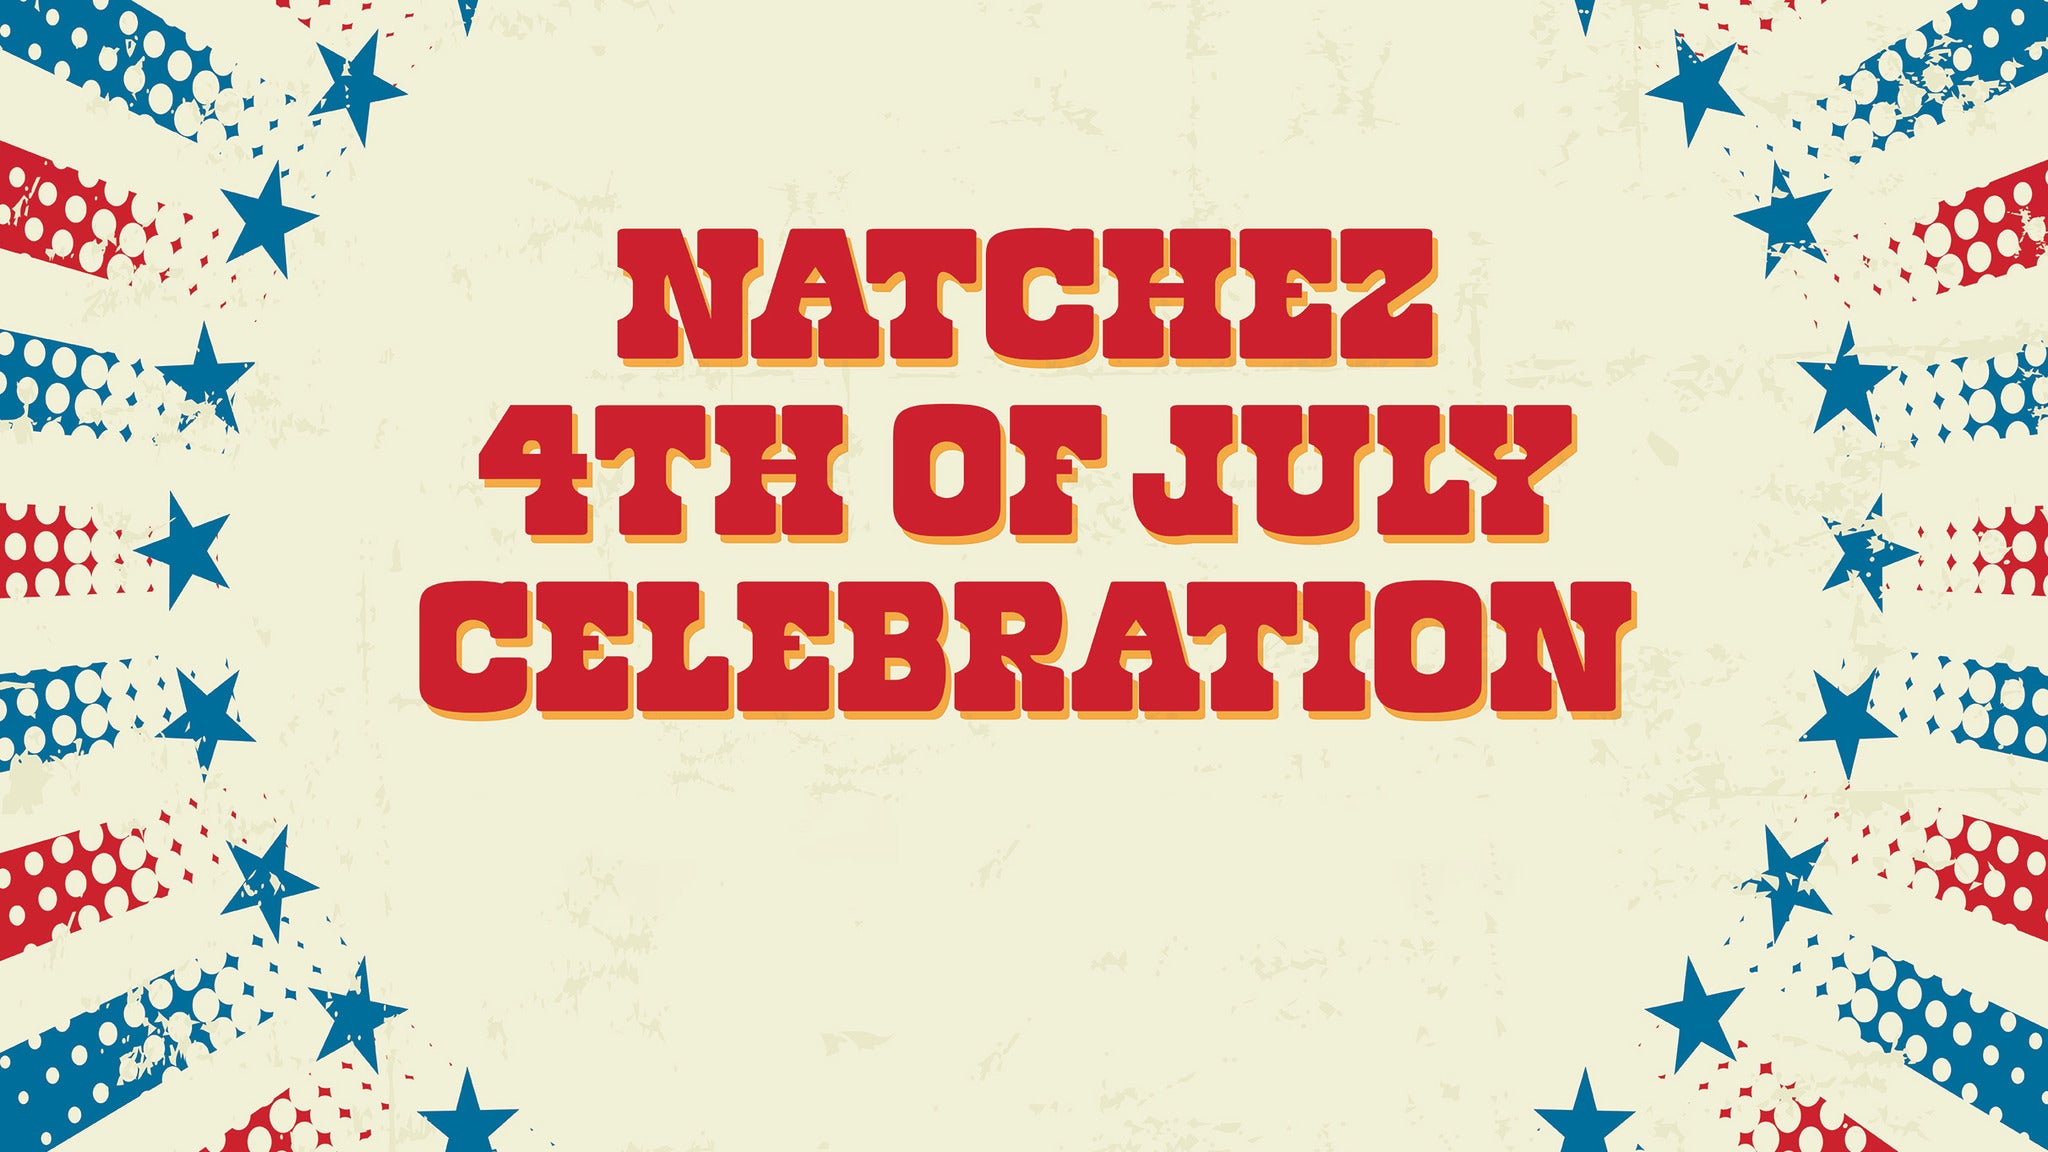 Natchez 4th of July Celebration - Sunday presale password for show tickets in Natchez, MS (The Natchez Bluff)